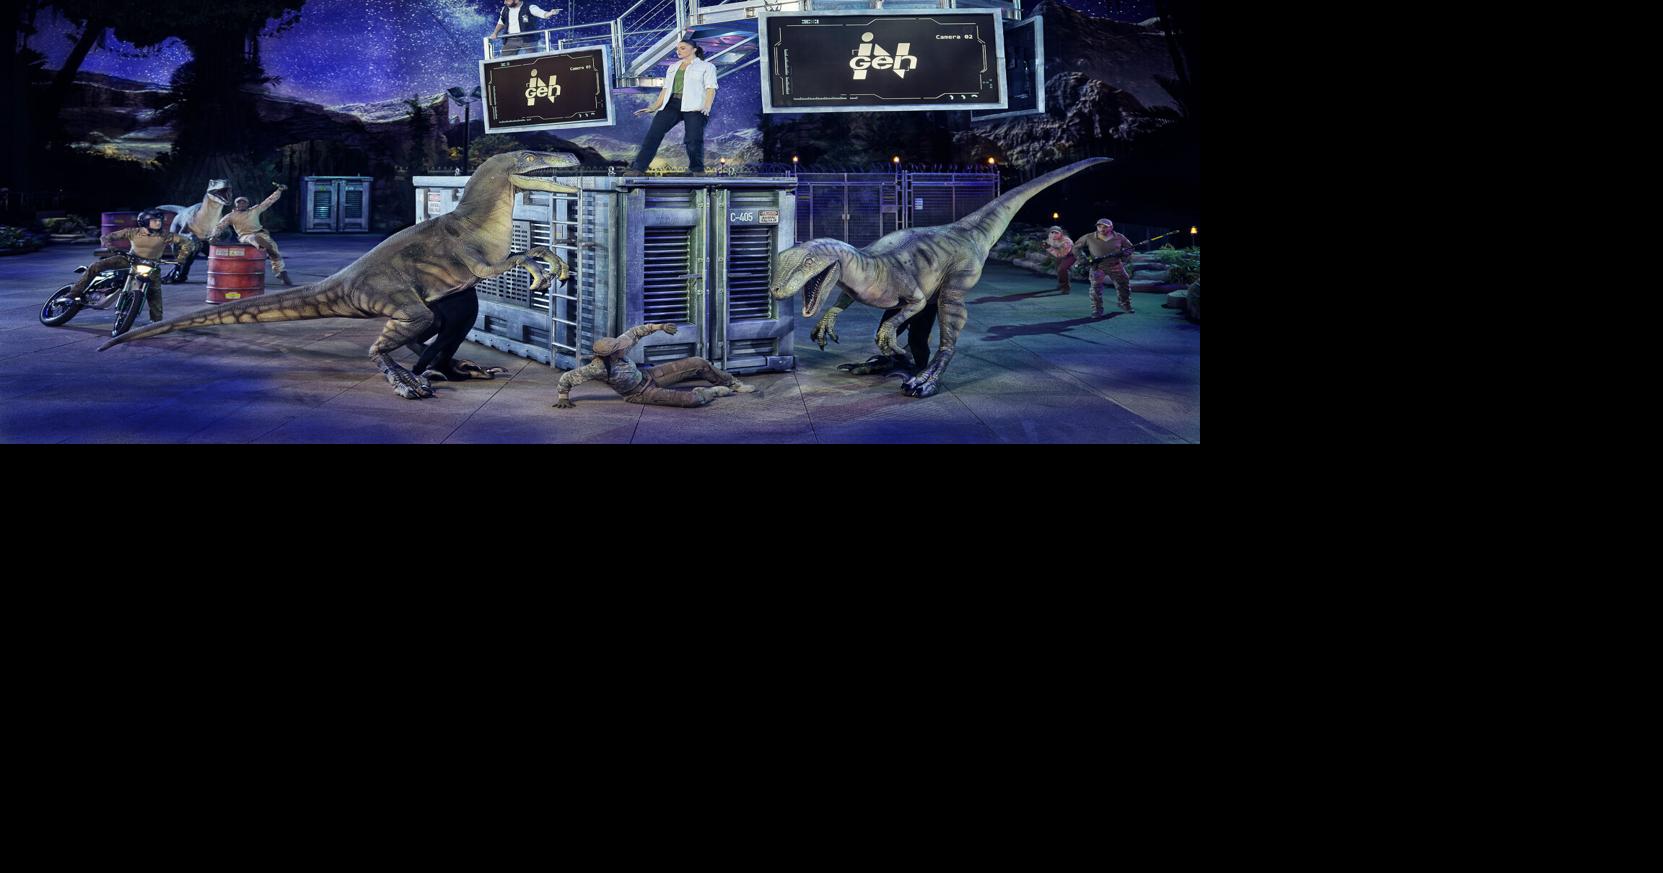 Universal announces Jurassic World arena tour